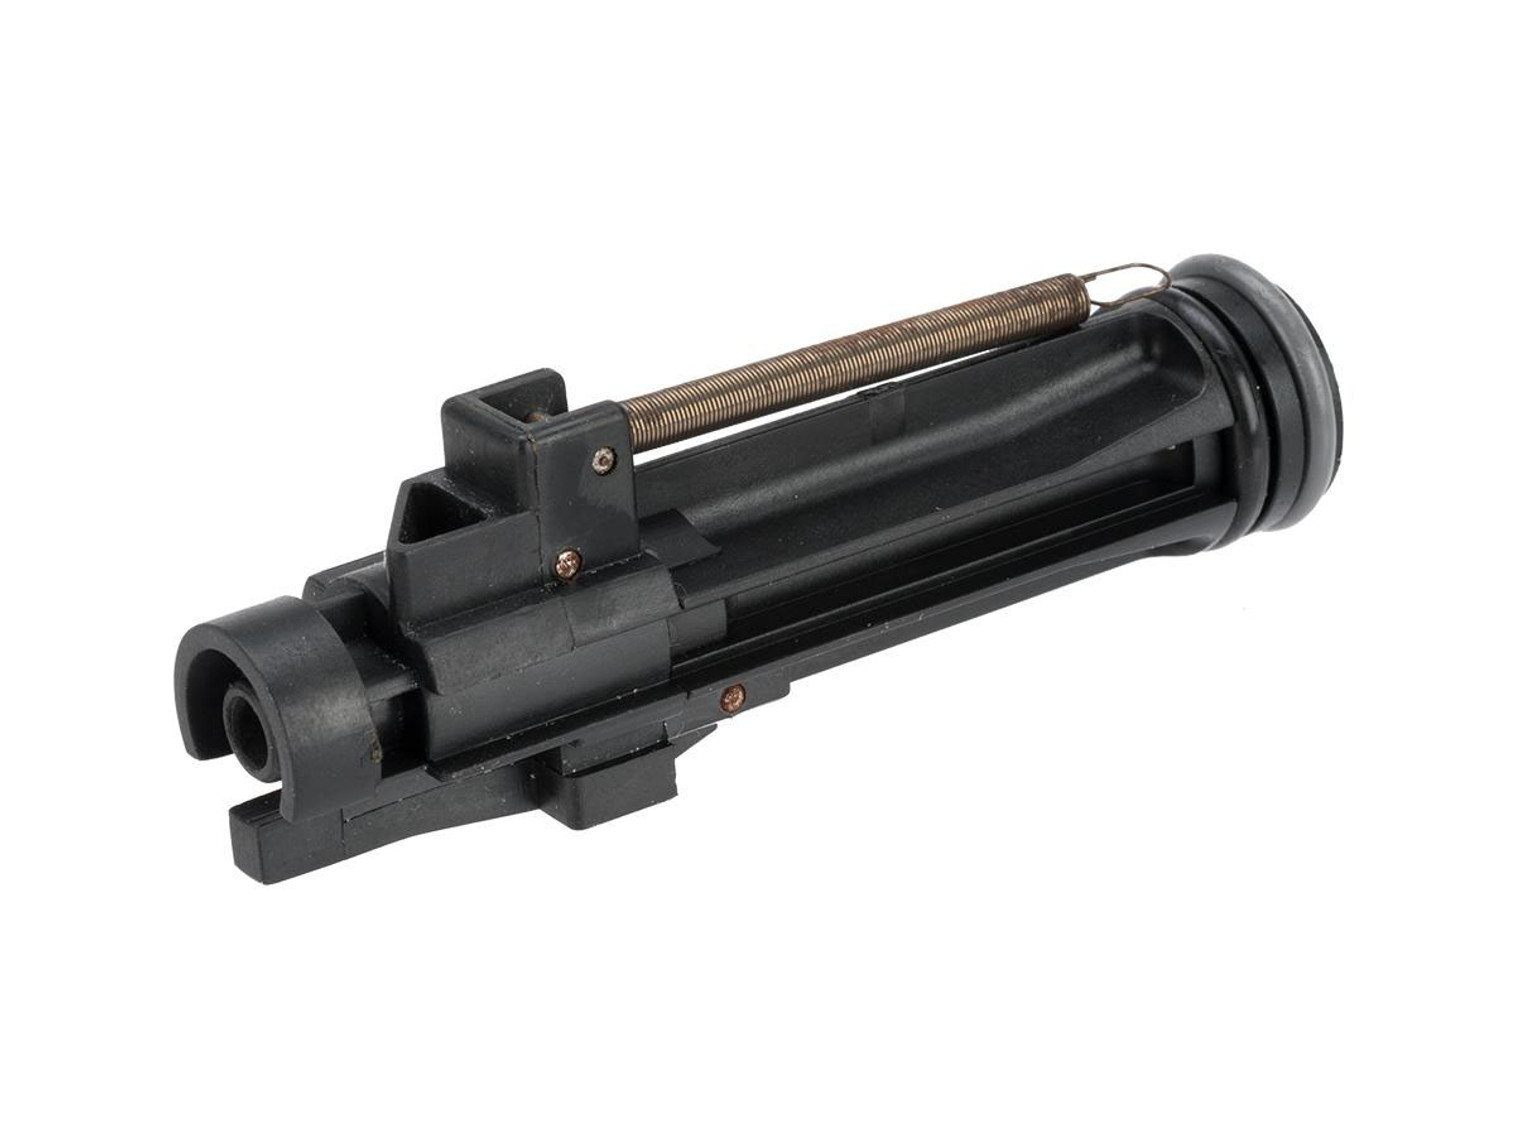 TNT Airsoft High Flow Air Nozzle Kit for GHK G5 Series GBB Rifles